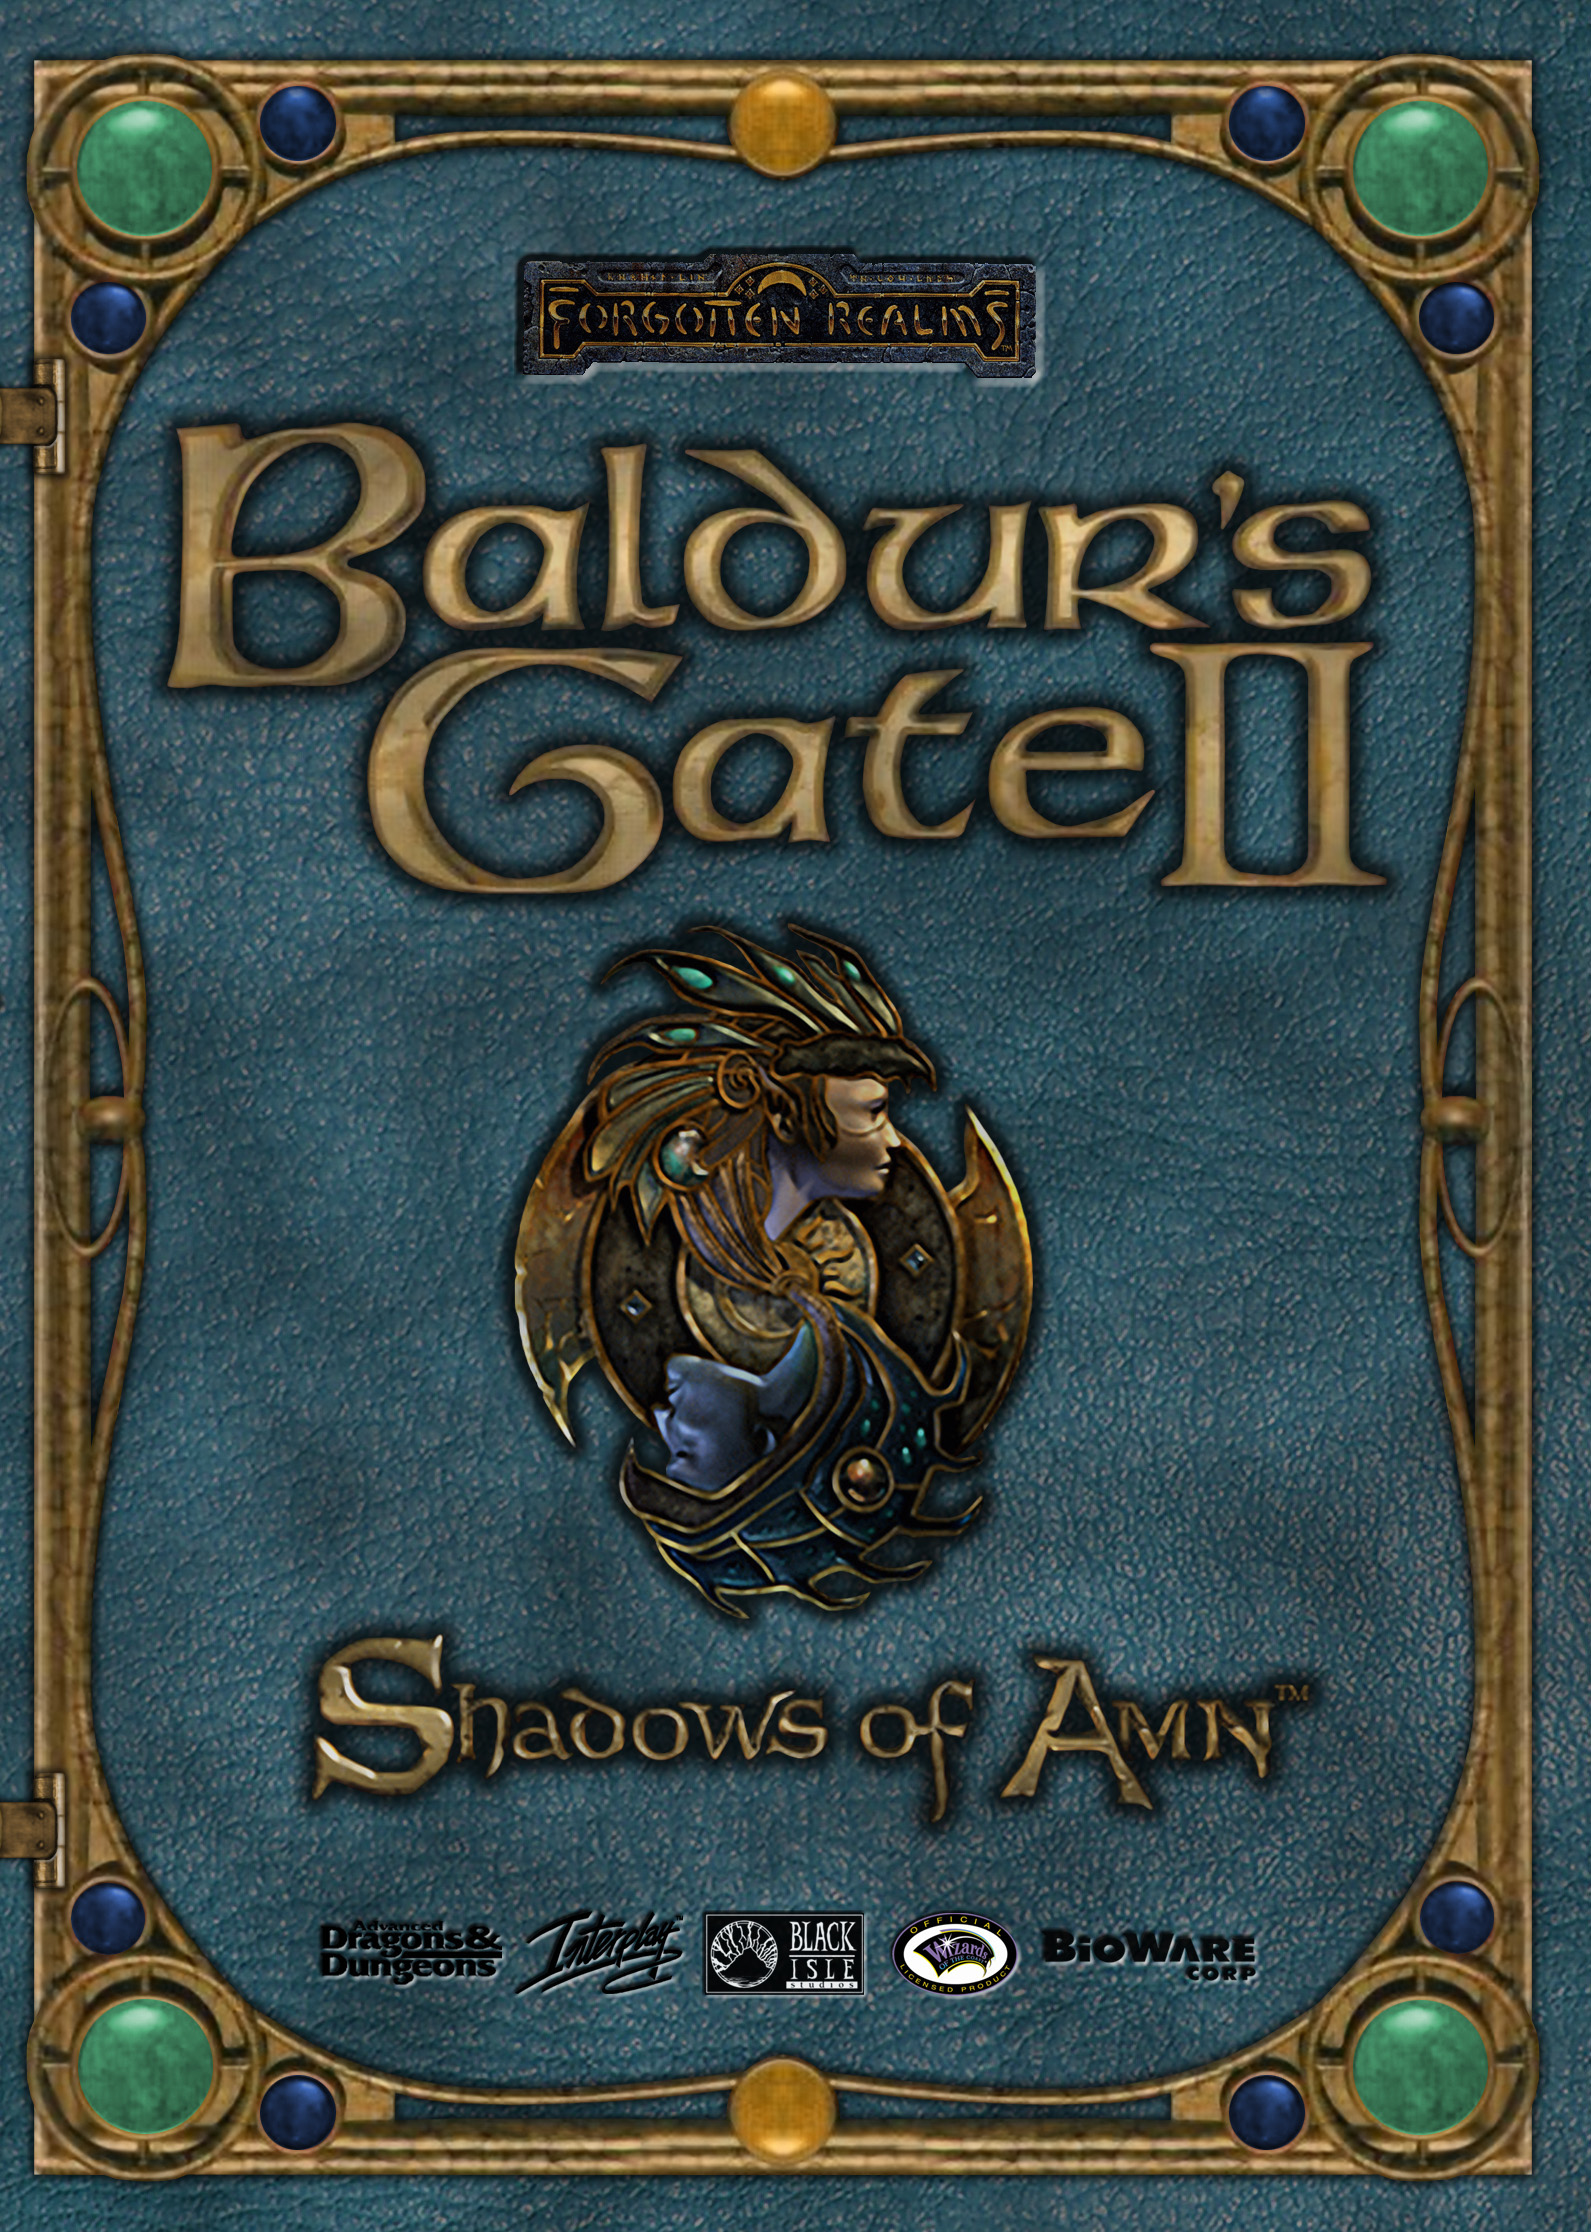 Baldur's Gate II: Shadows Of Amn Wallpapers